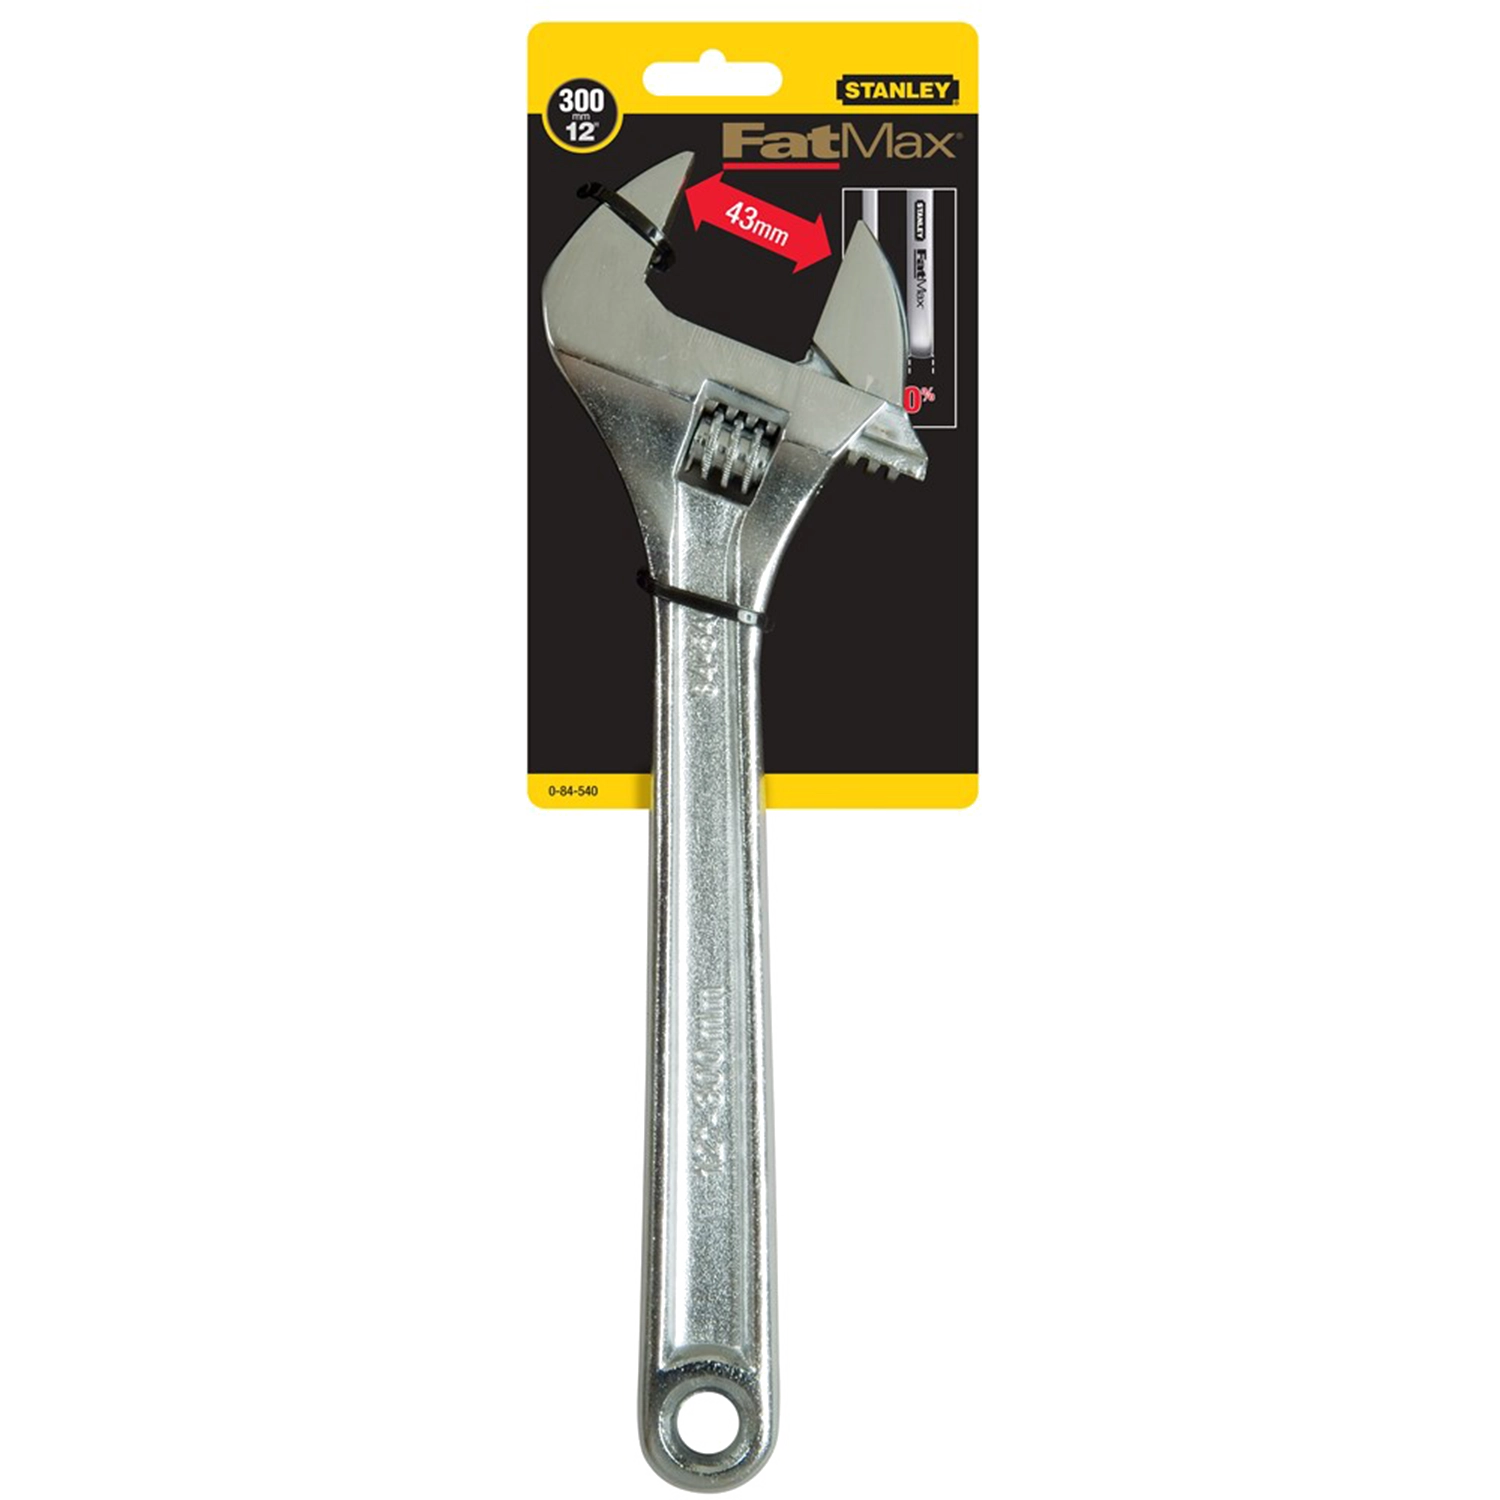 KNIPEX Verstelbare Moersleutel Fatmax 43 X 300 mm 0-84-540 - 300 mm verstelbare moersleutel met rode FATMAX-handgreep en 43 mm bekopening.